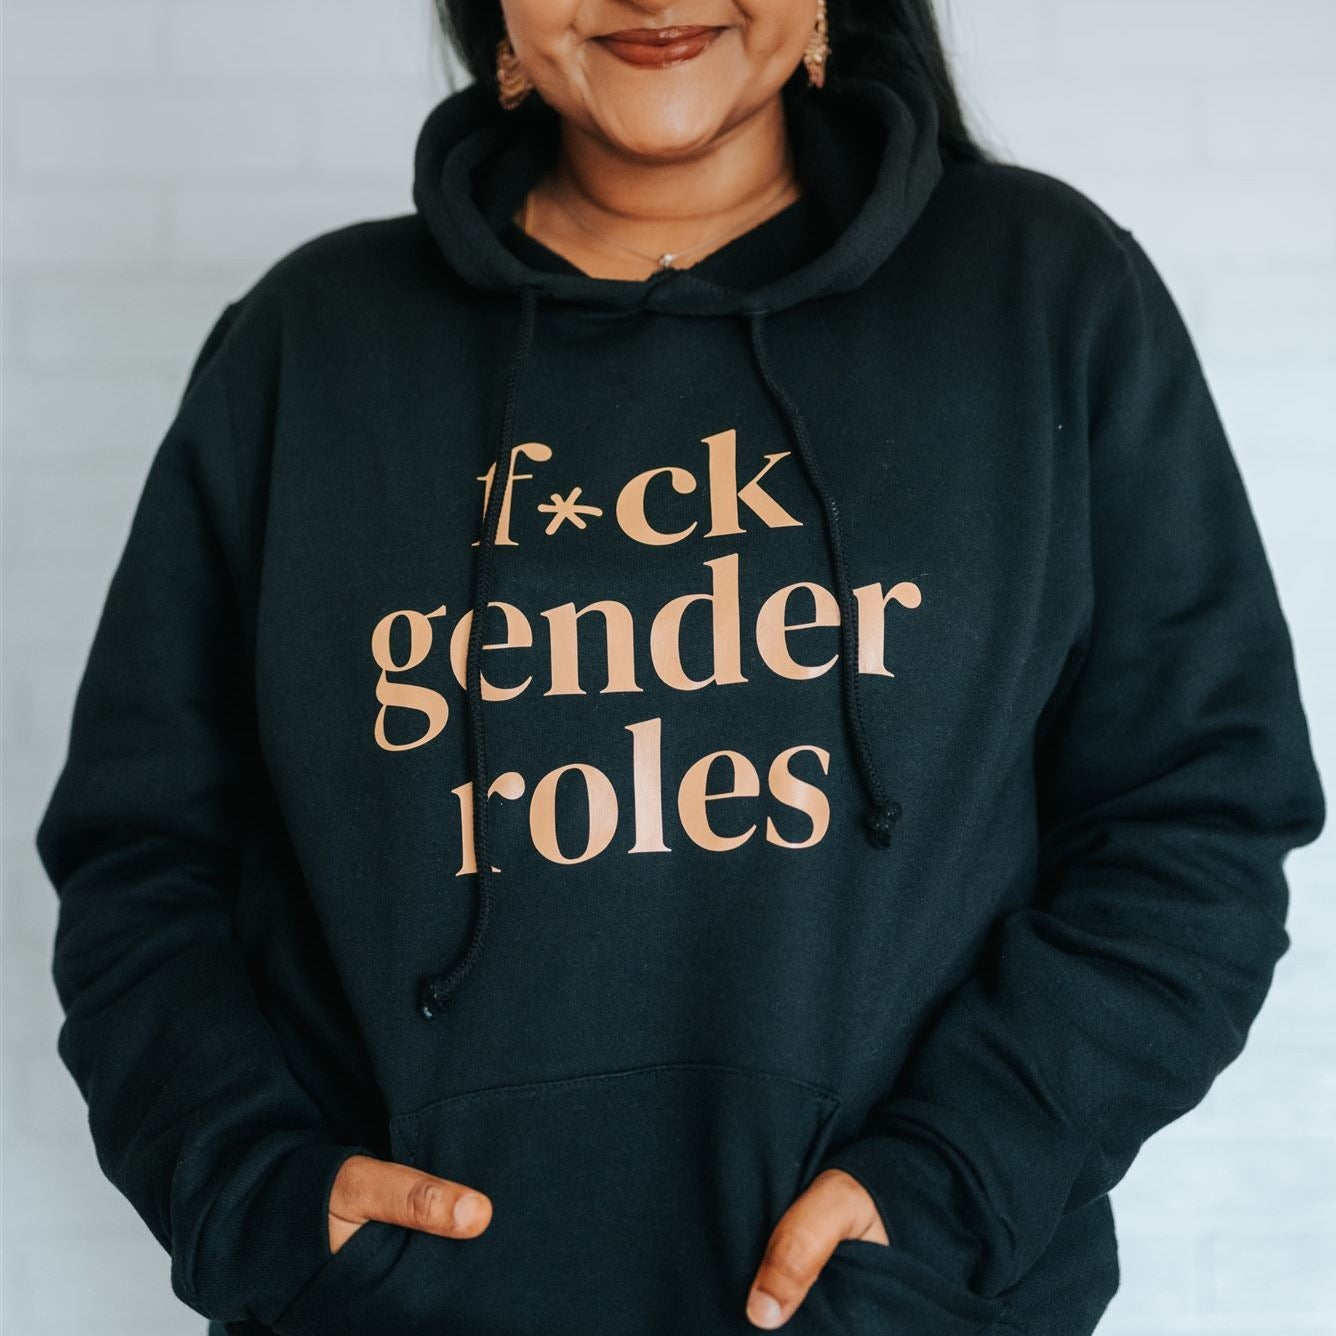 Jenny Jay is pictured wearing a black hooded sweatshirt. Sweatshirt reads 'F*ck Gender Roles' in black text.